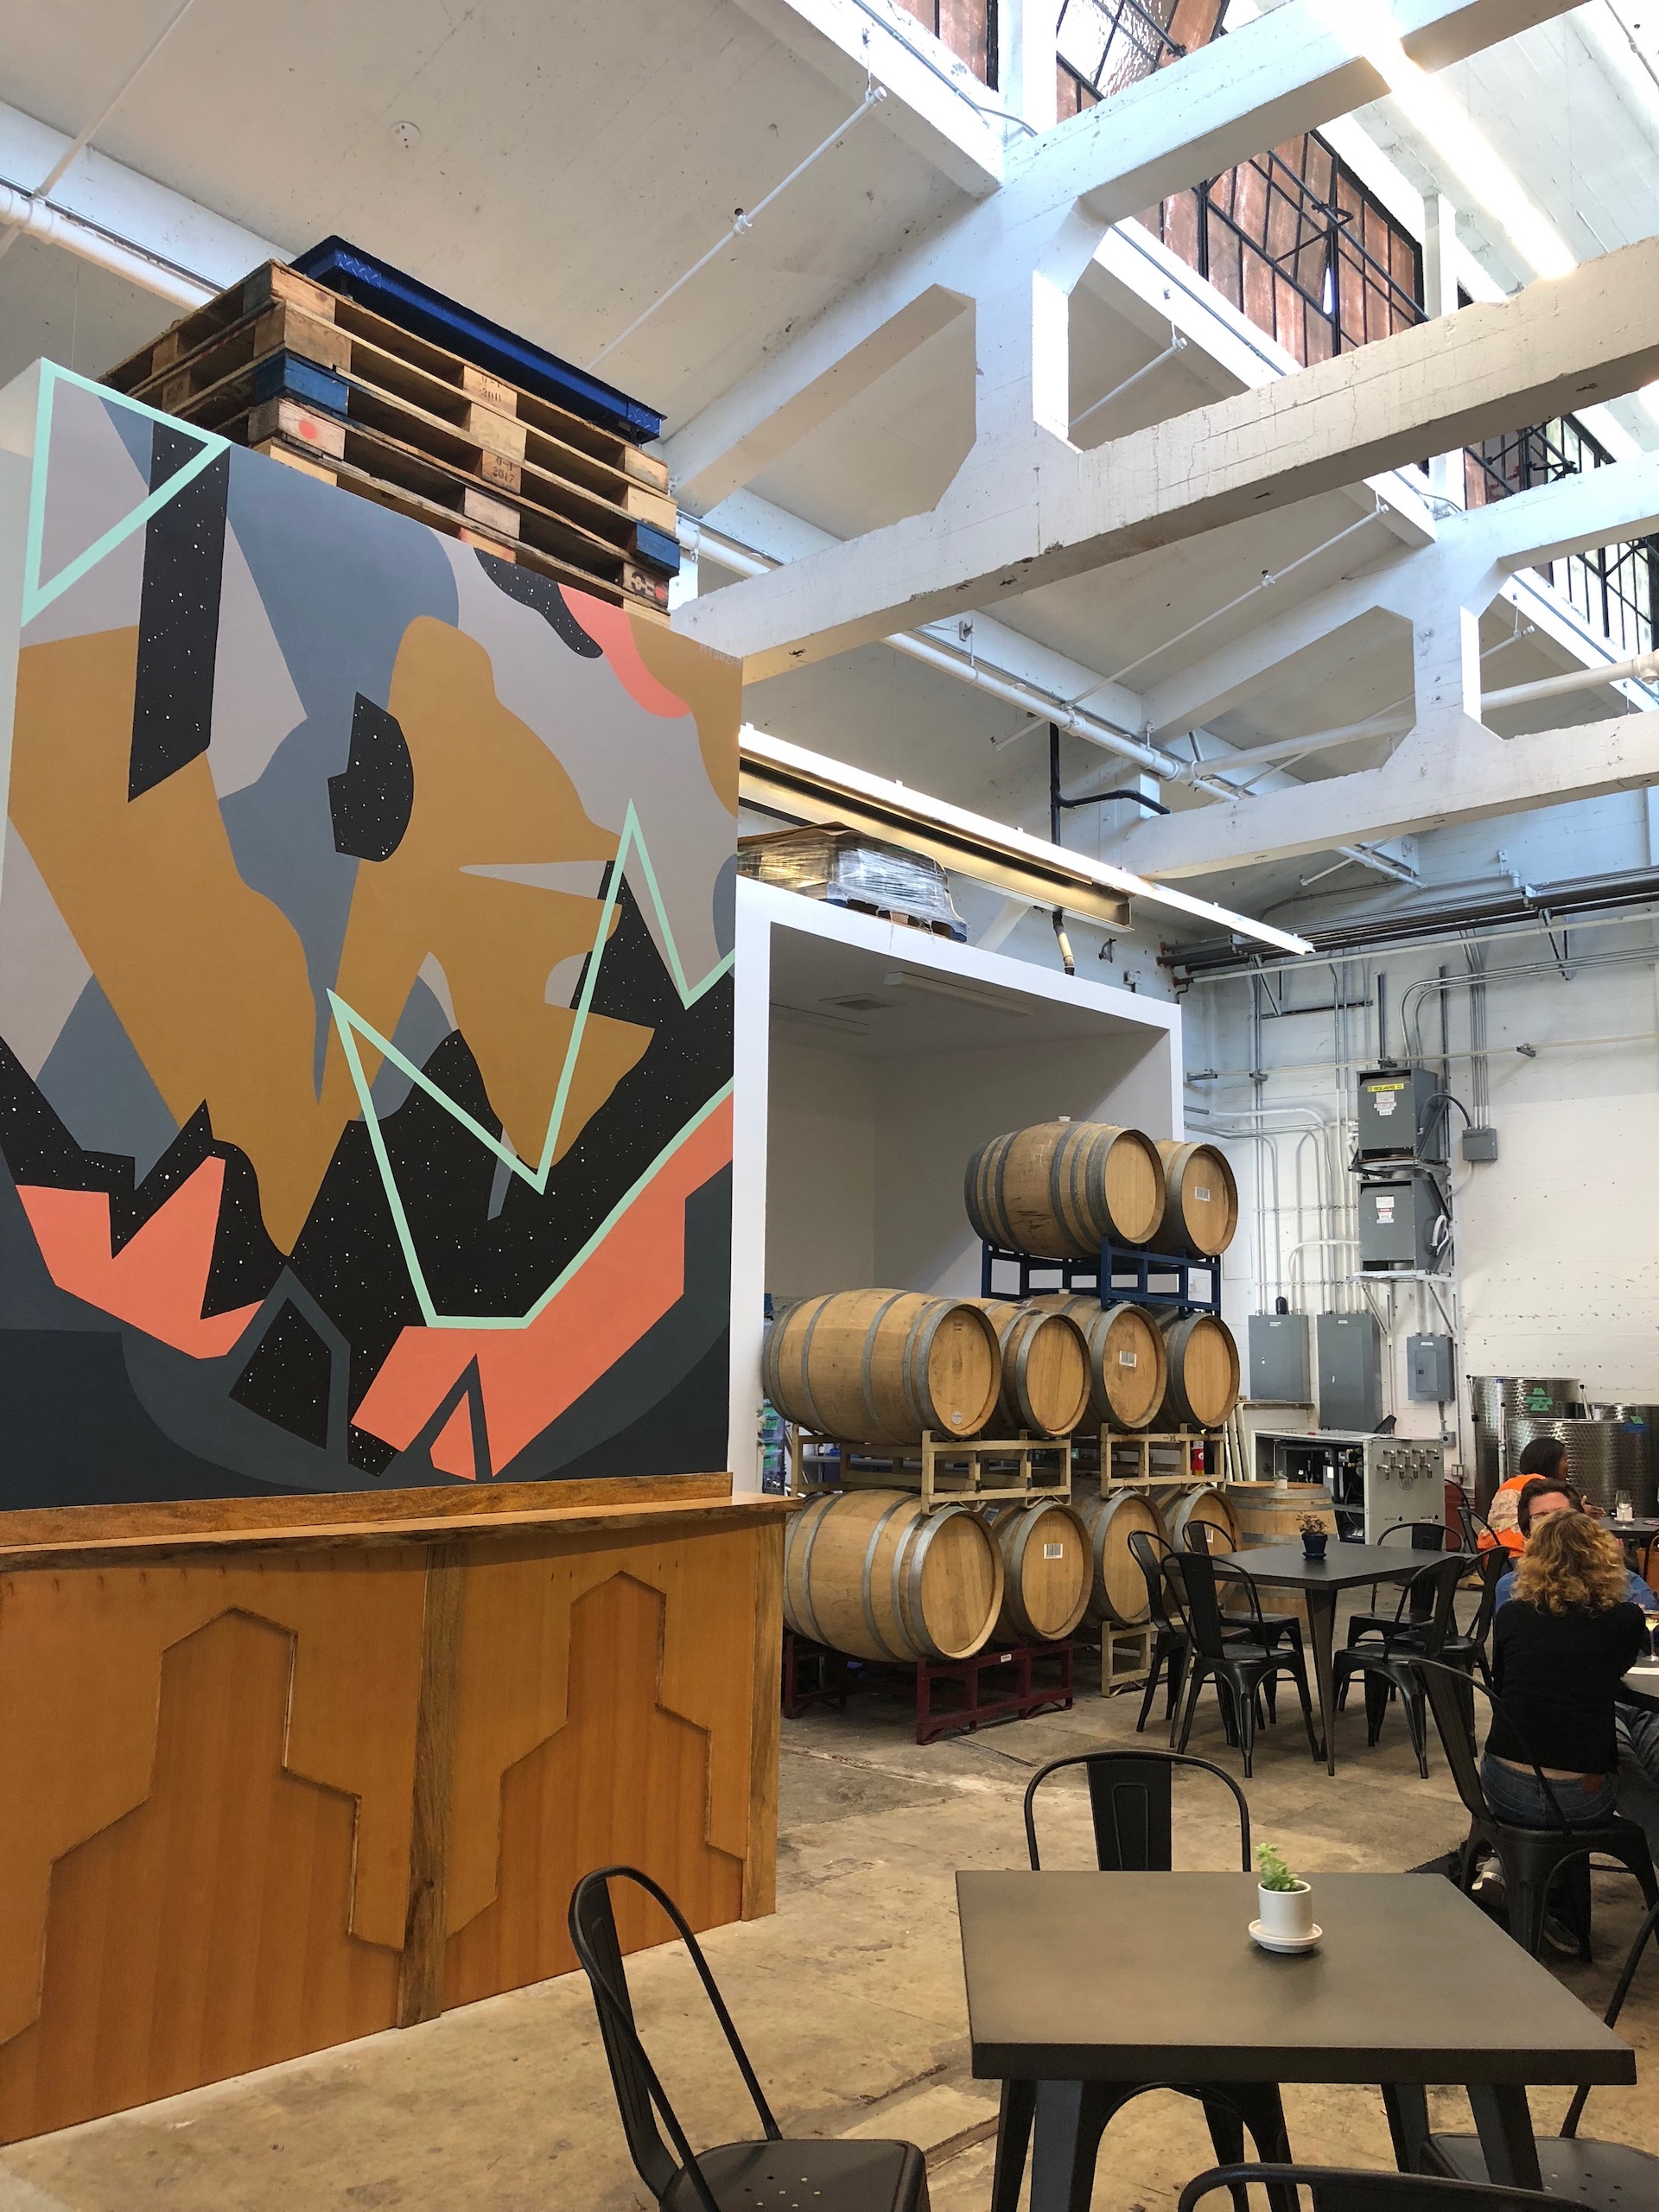 The artsy-industrial interior of Berkeley newcomer Bue Ox Wine Co.